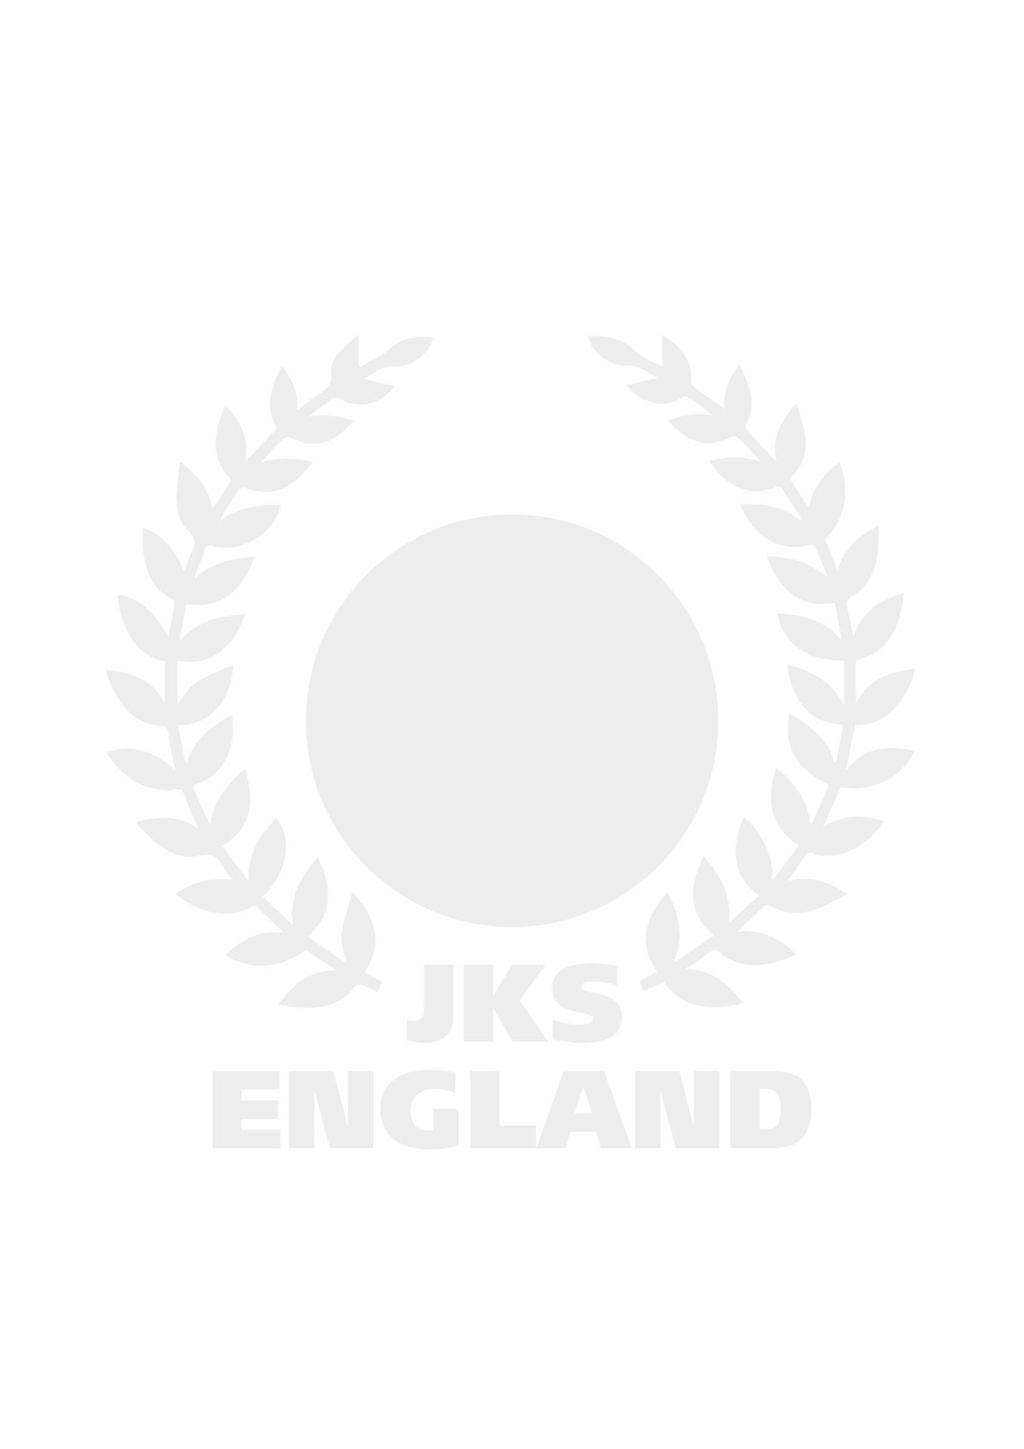 Individual Kata (Cont d) Event 12) Dan grades Johann Santos - / 16yrs and over / Male Danny Jordan - Sam Jackson - Red Sam McVeigh - Sheffield Team Kata Event 13) Any grade / 8-11yrs / Mixed Red 1 C